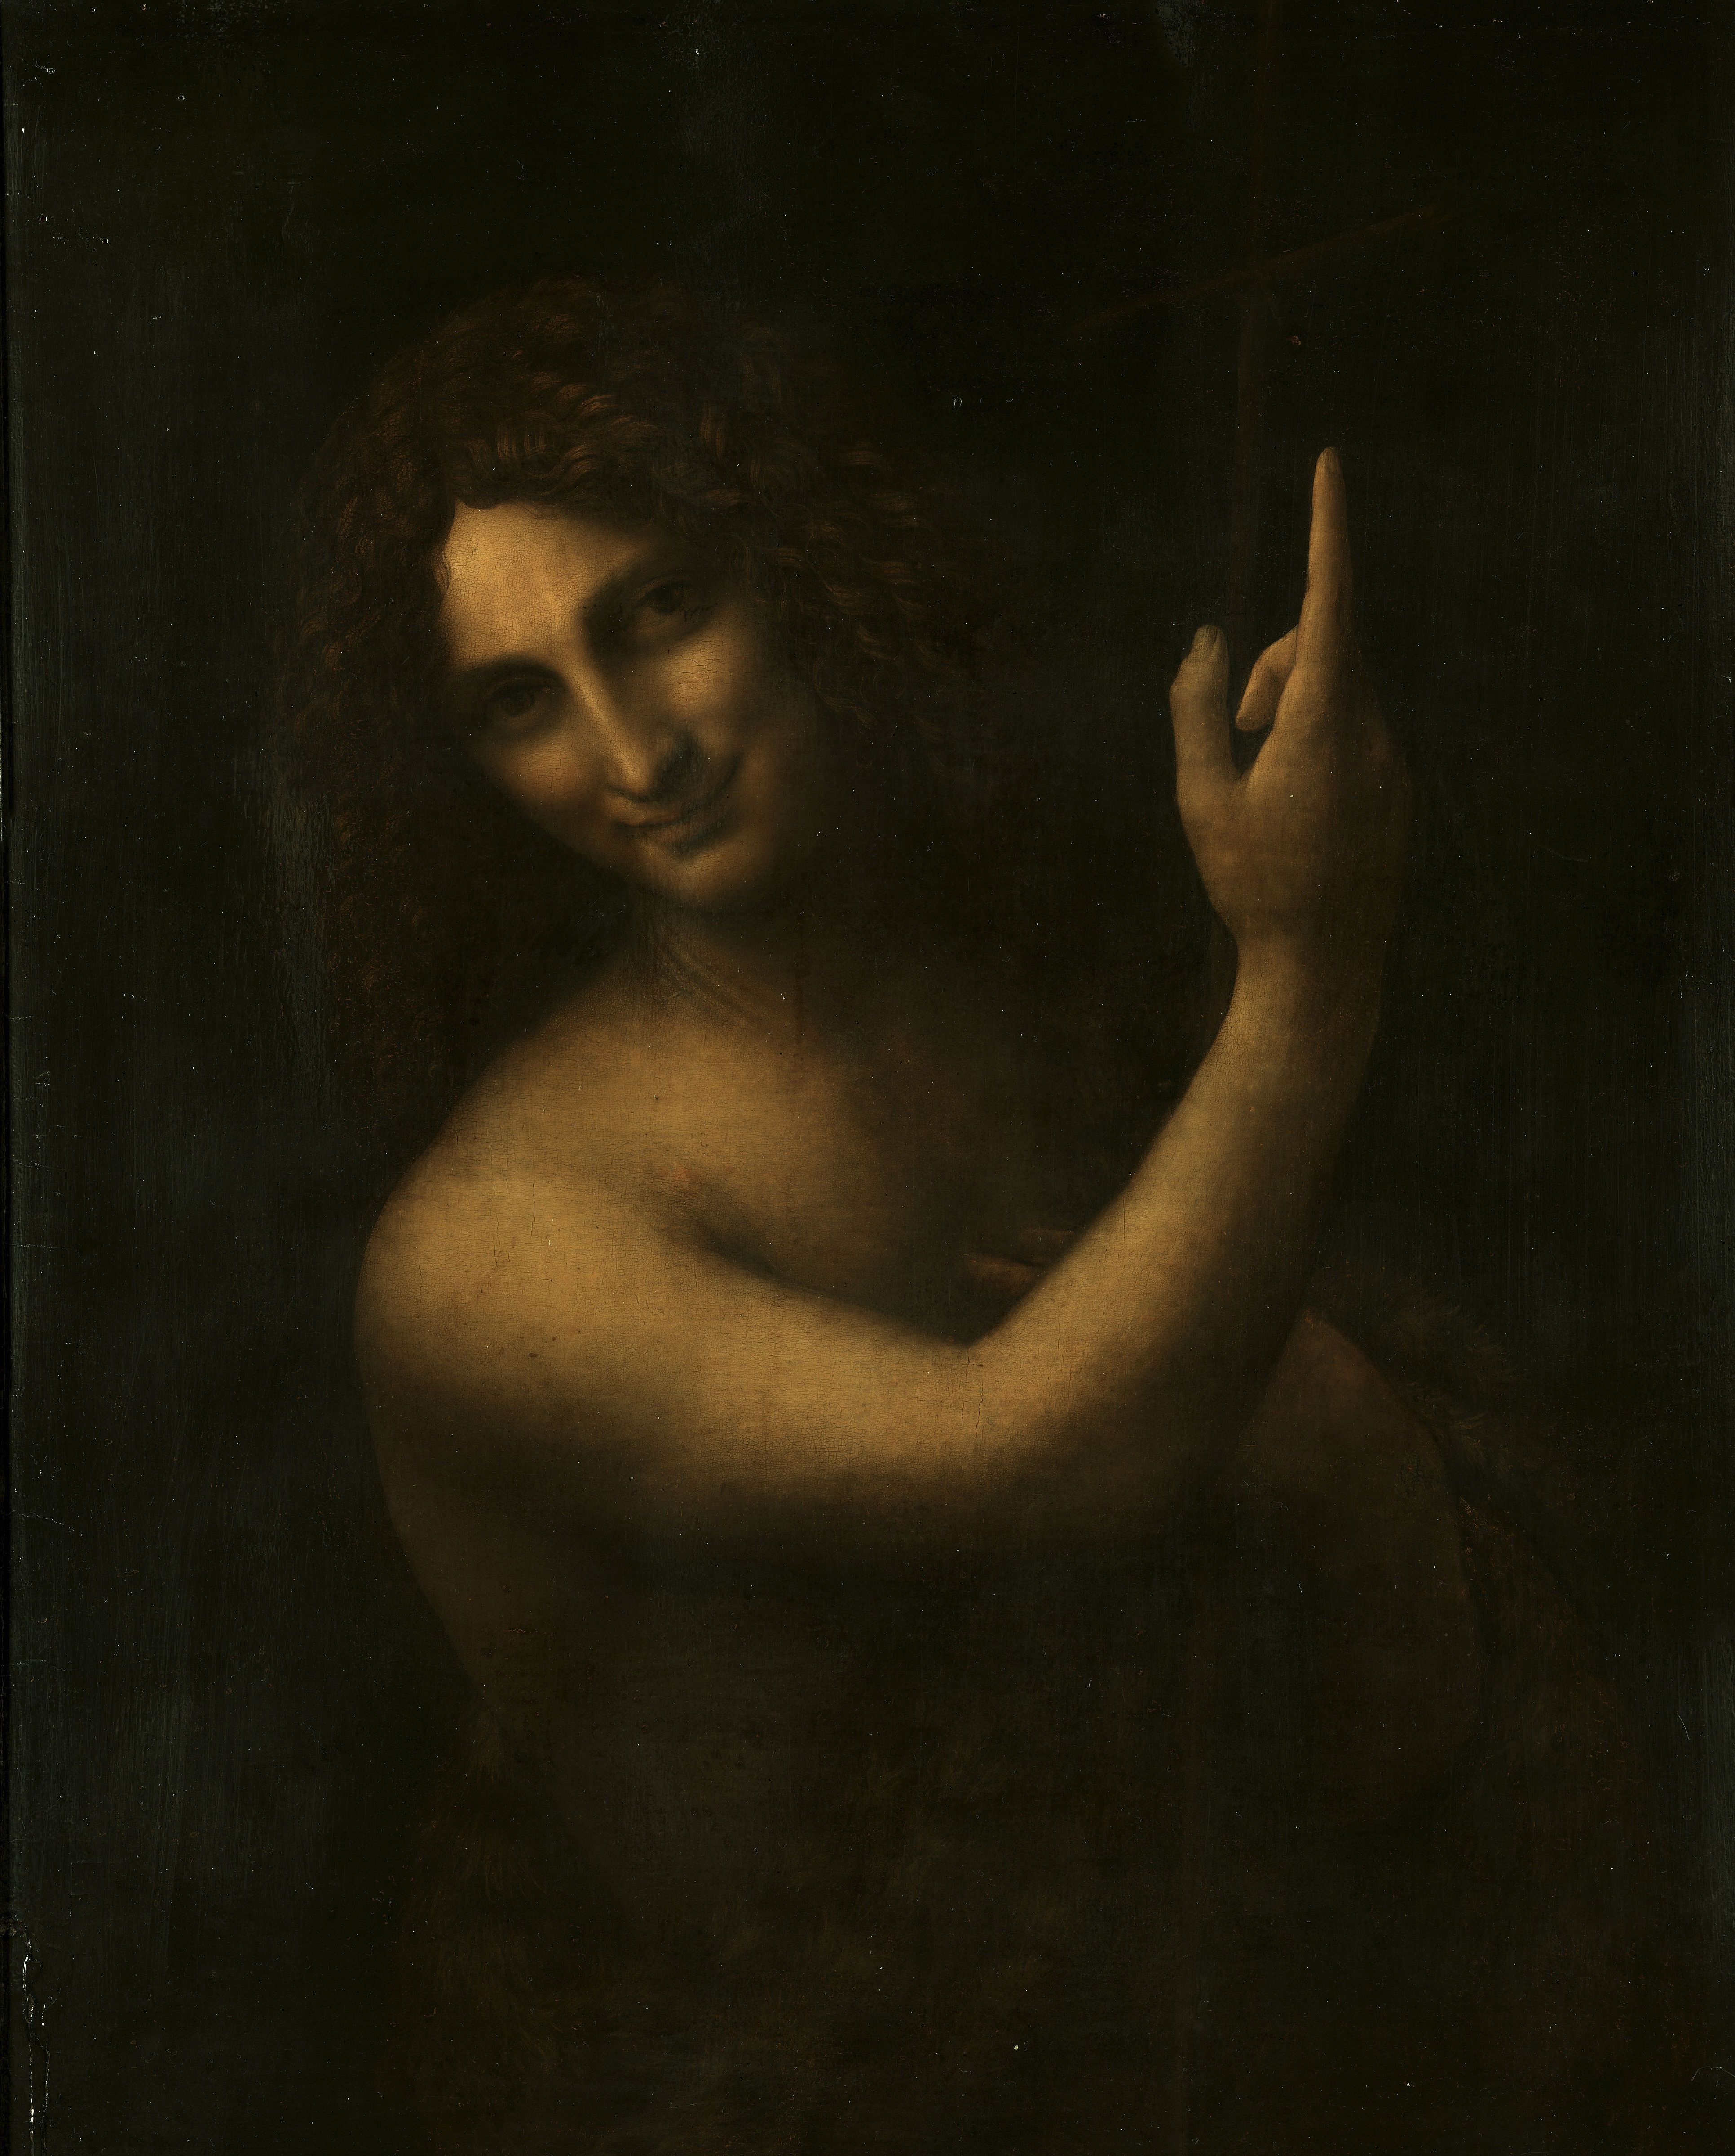 St John the Baptist by Leonardo da Vinci